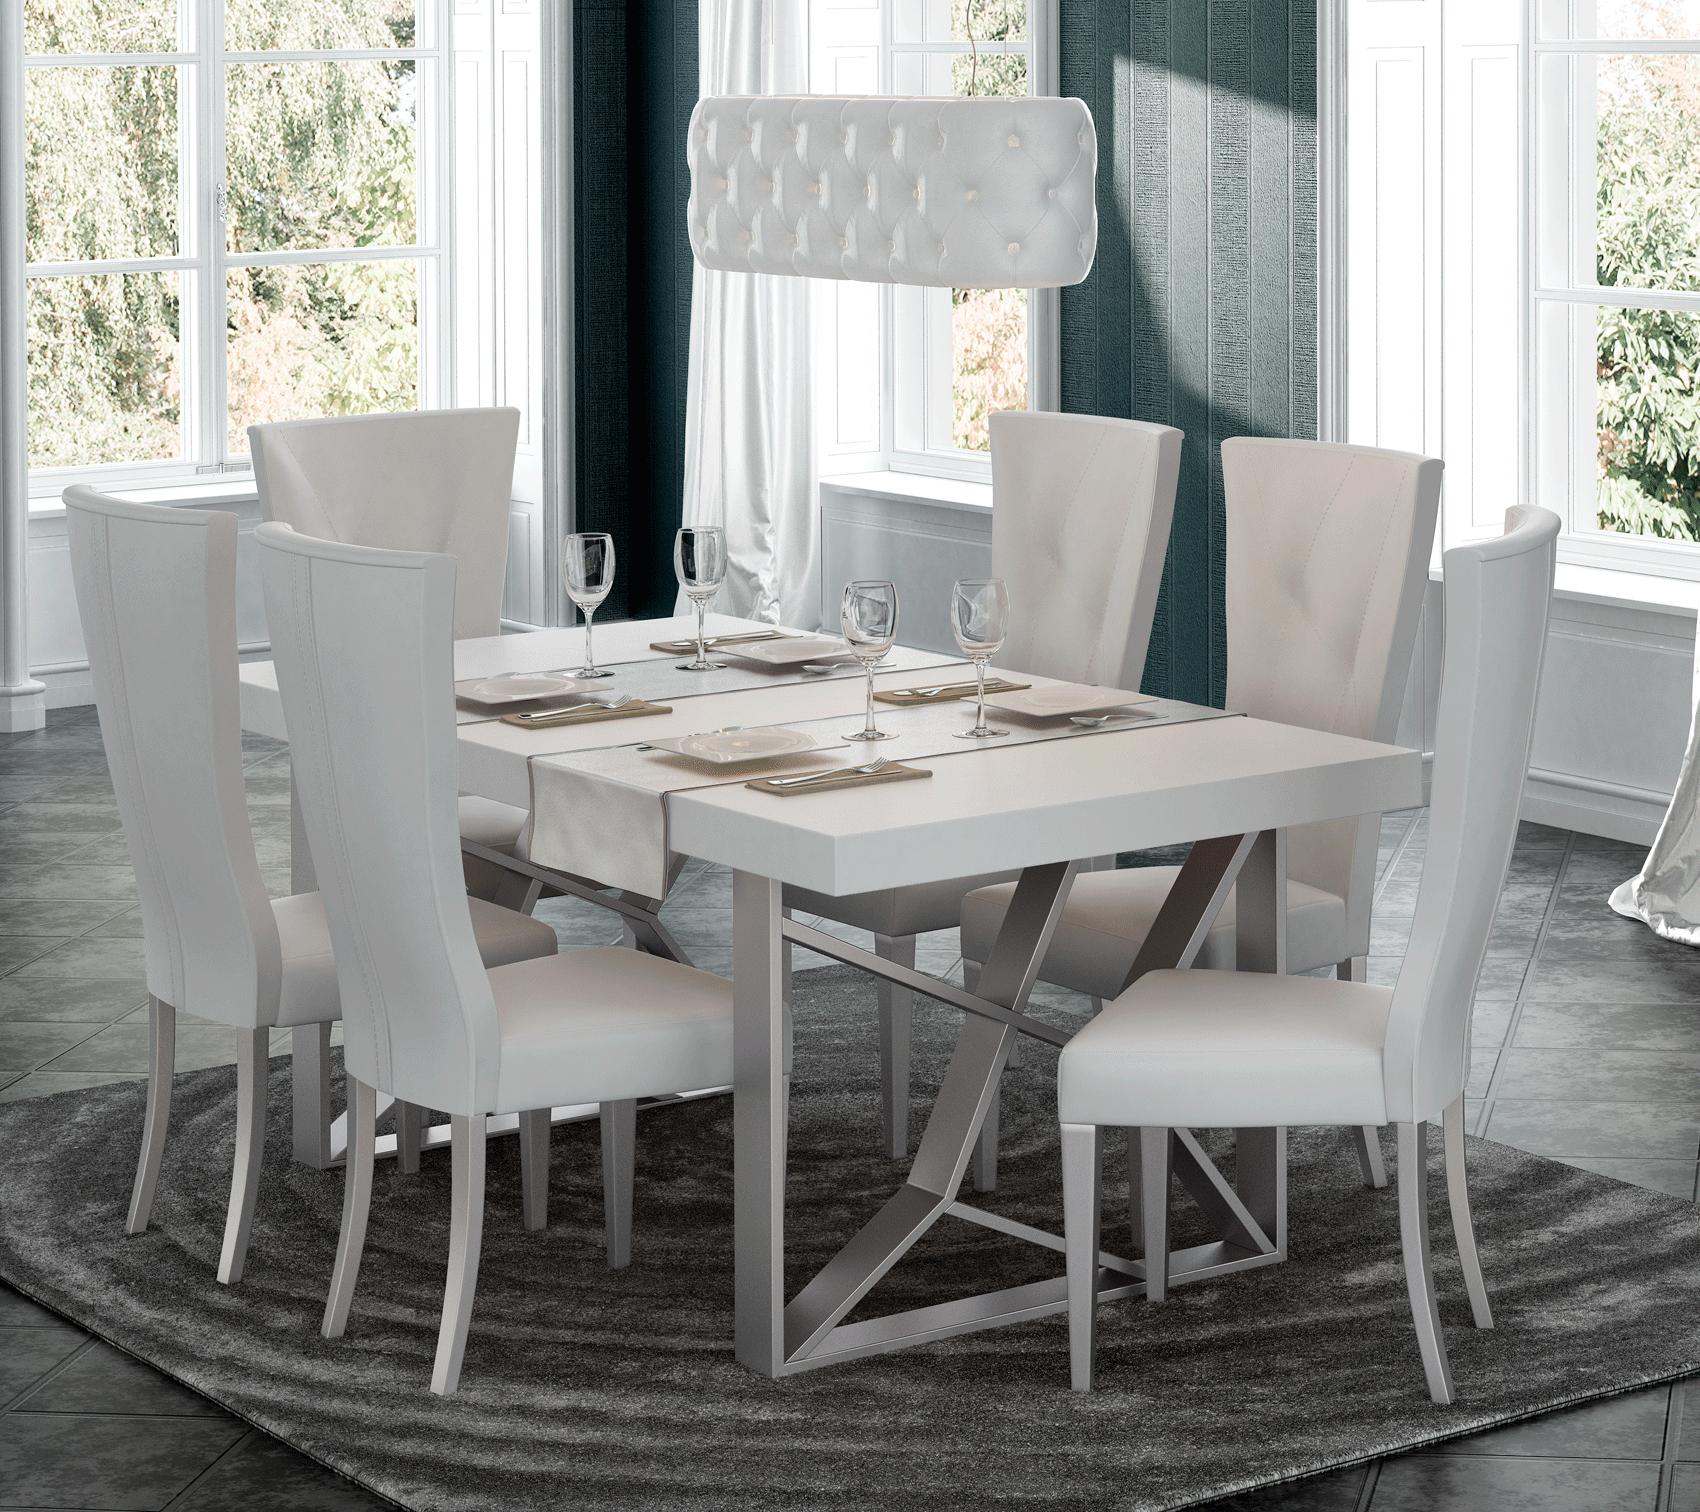 Contemporary, Modern Dining Table KIUDININGTABLE KIUDININGTABLE in White 